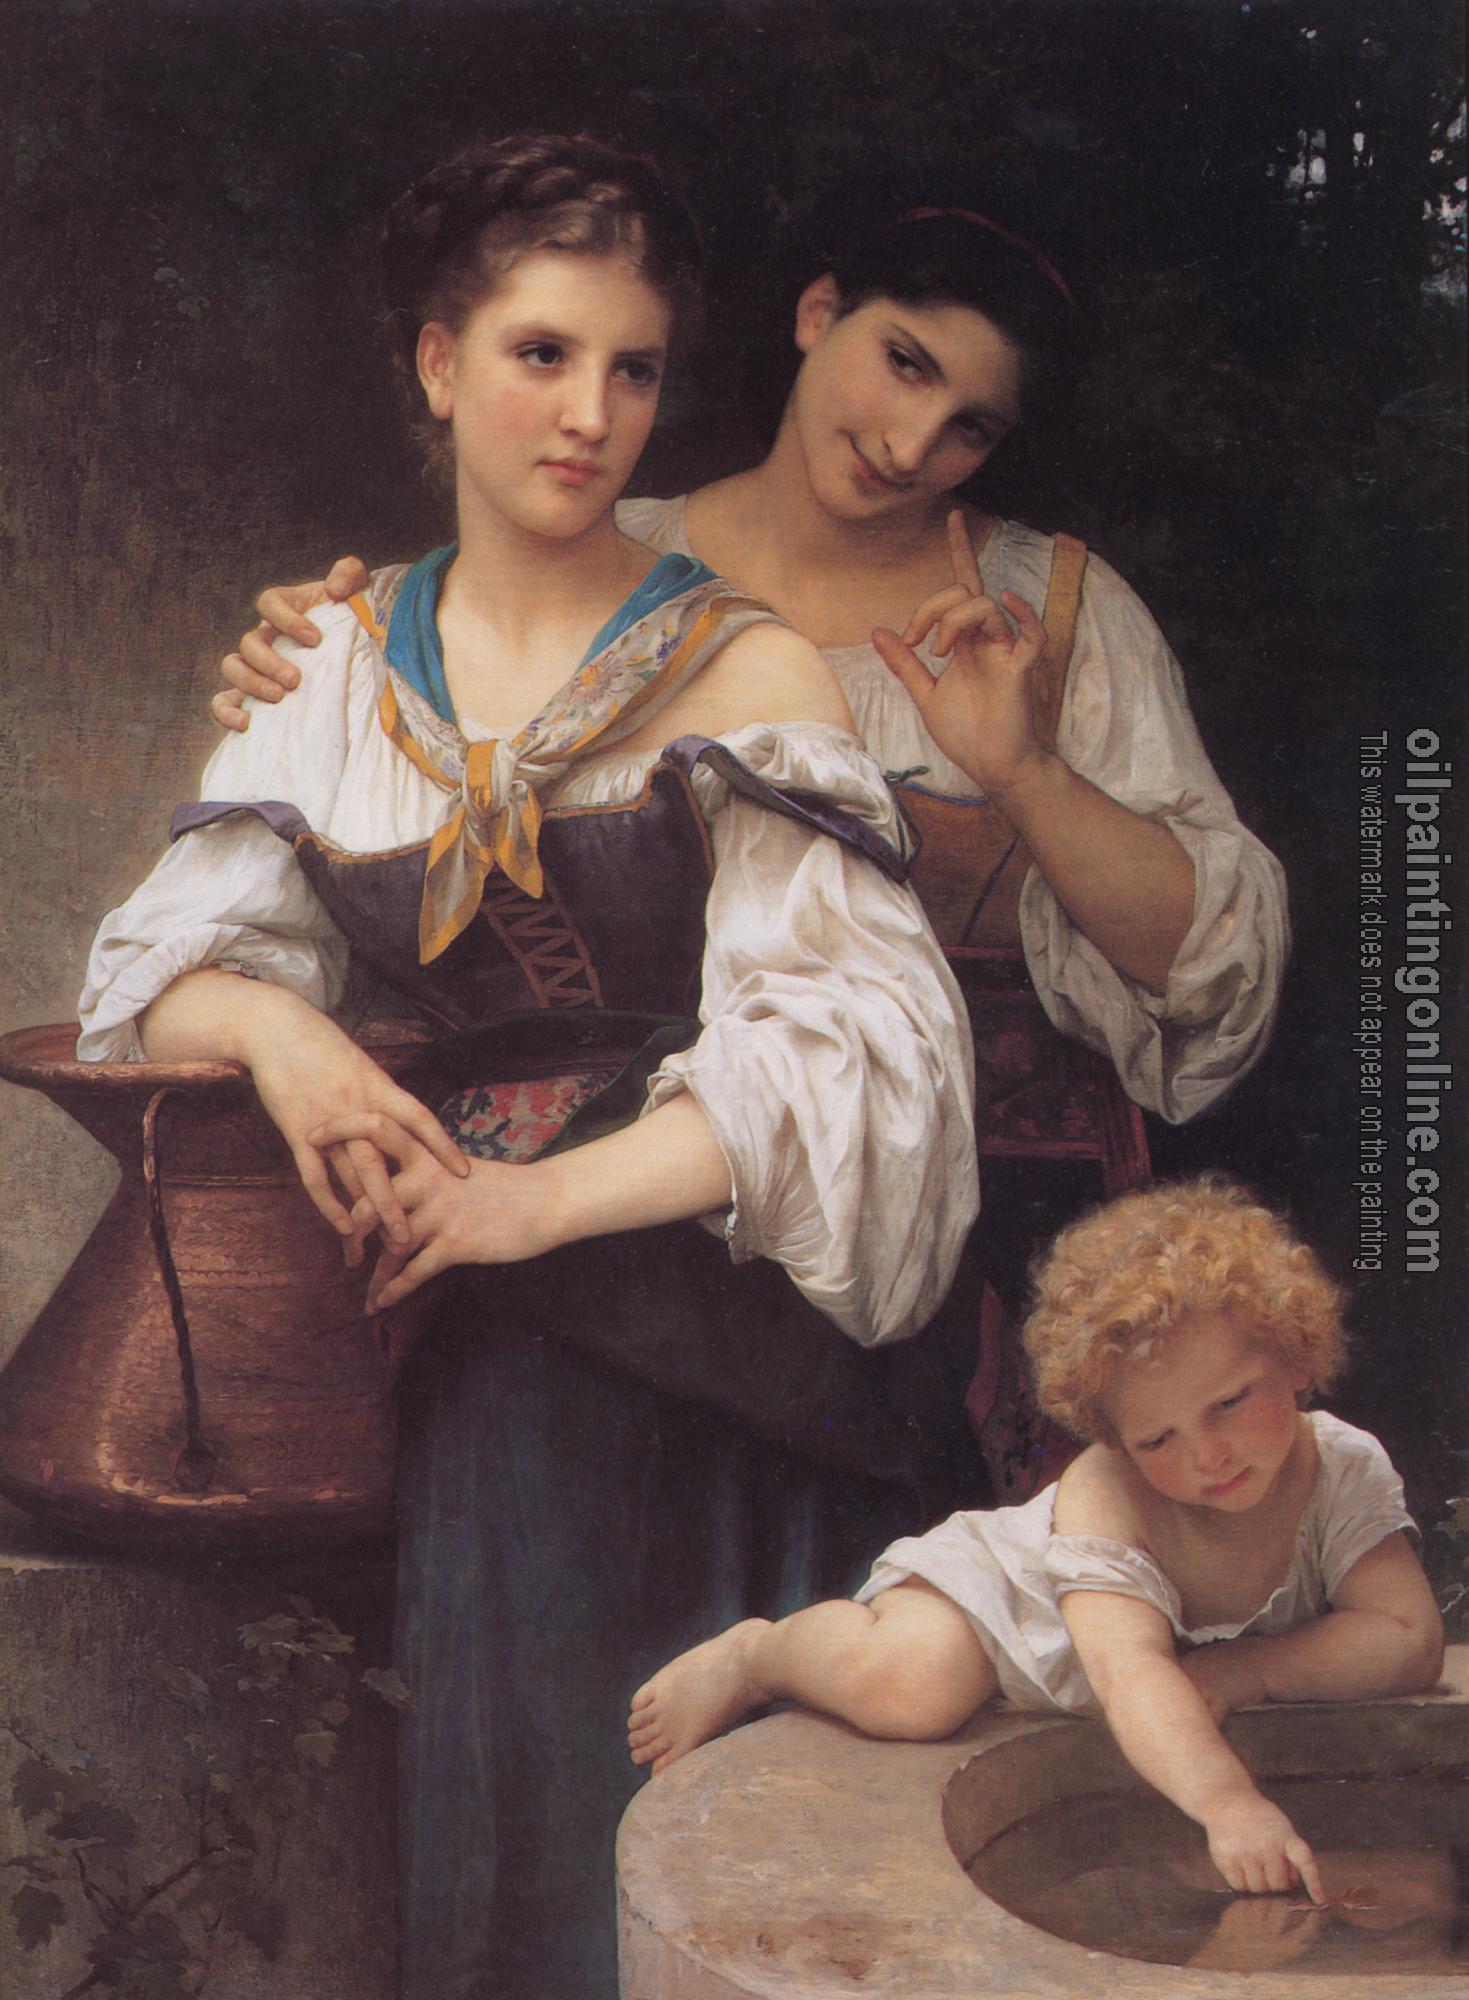 Bouguereau, William-Adolphe - The Secret